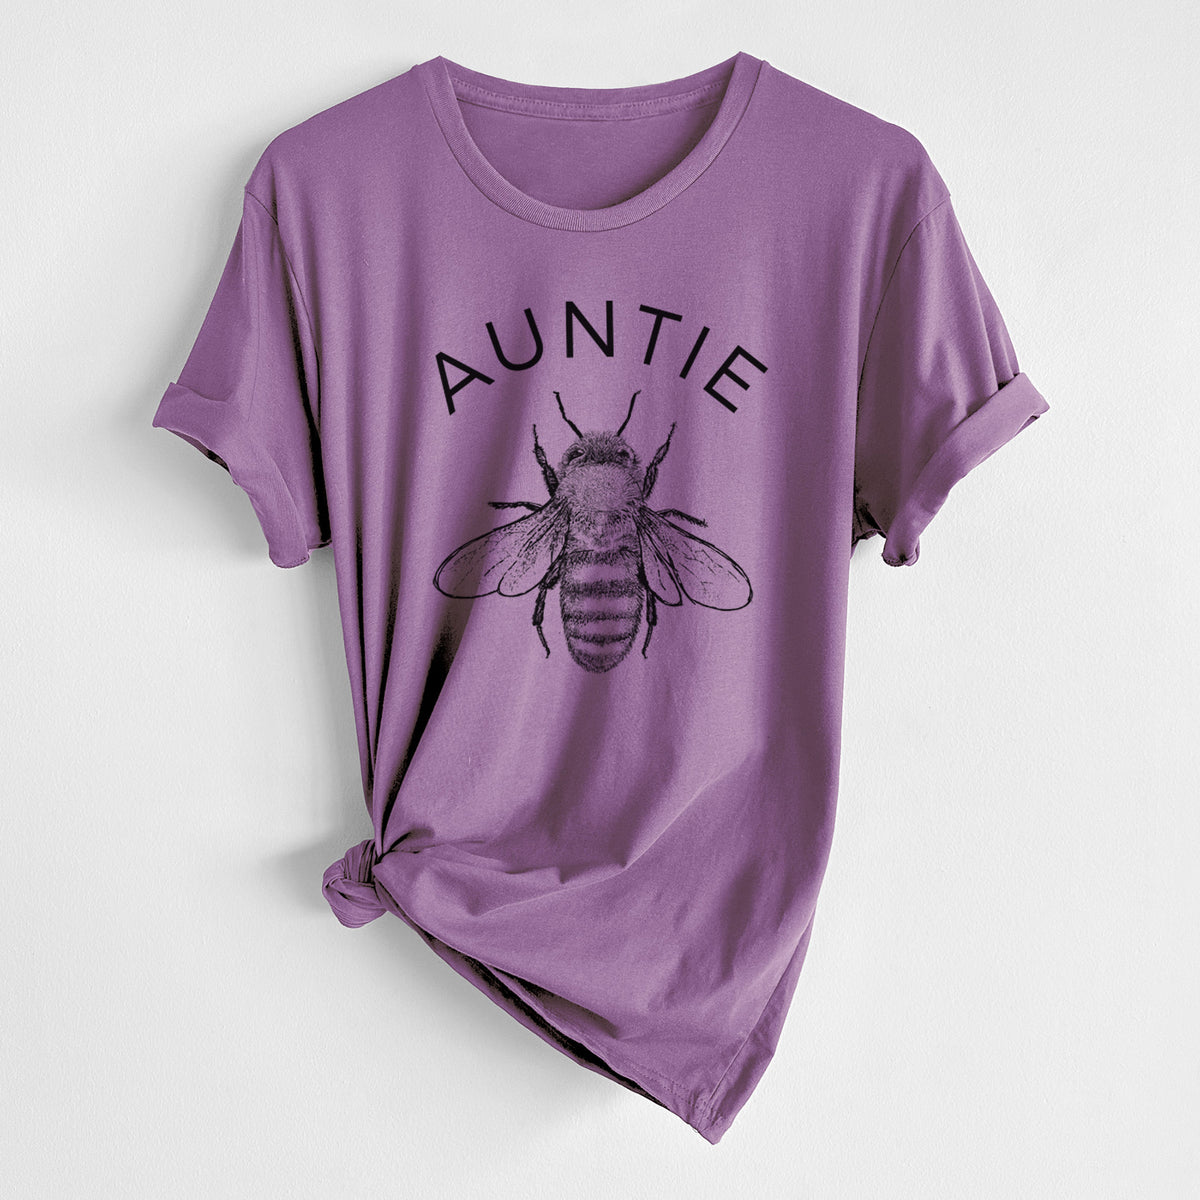 Auntie Bee - Unisex Crewneck - Made in USA - 100% Organic Cotton